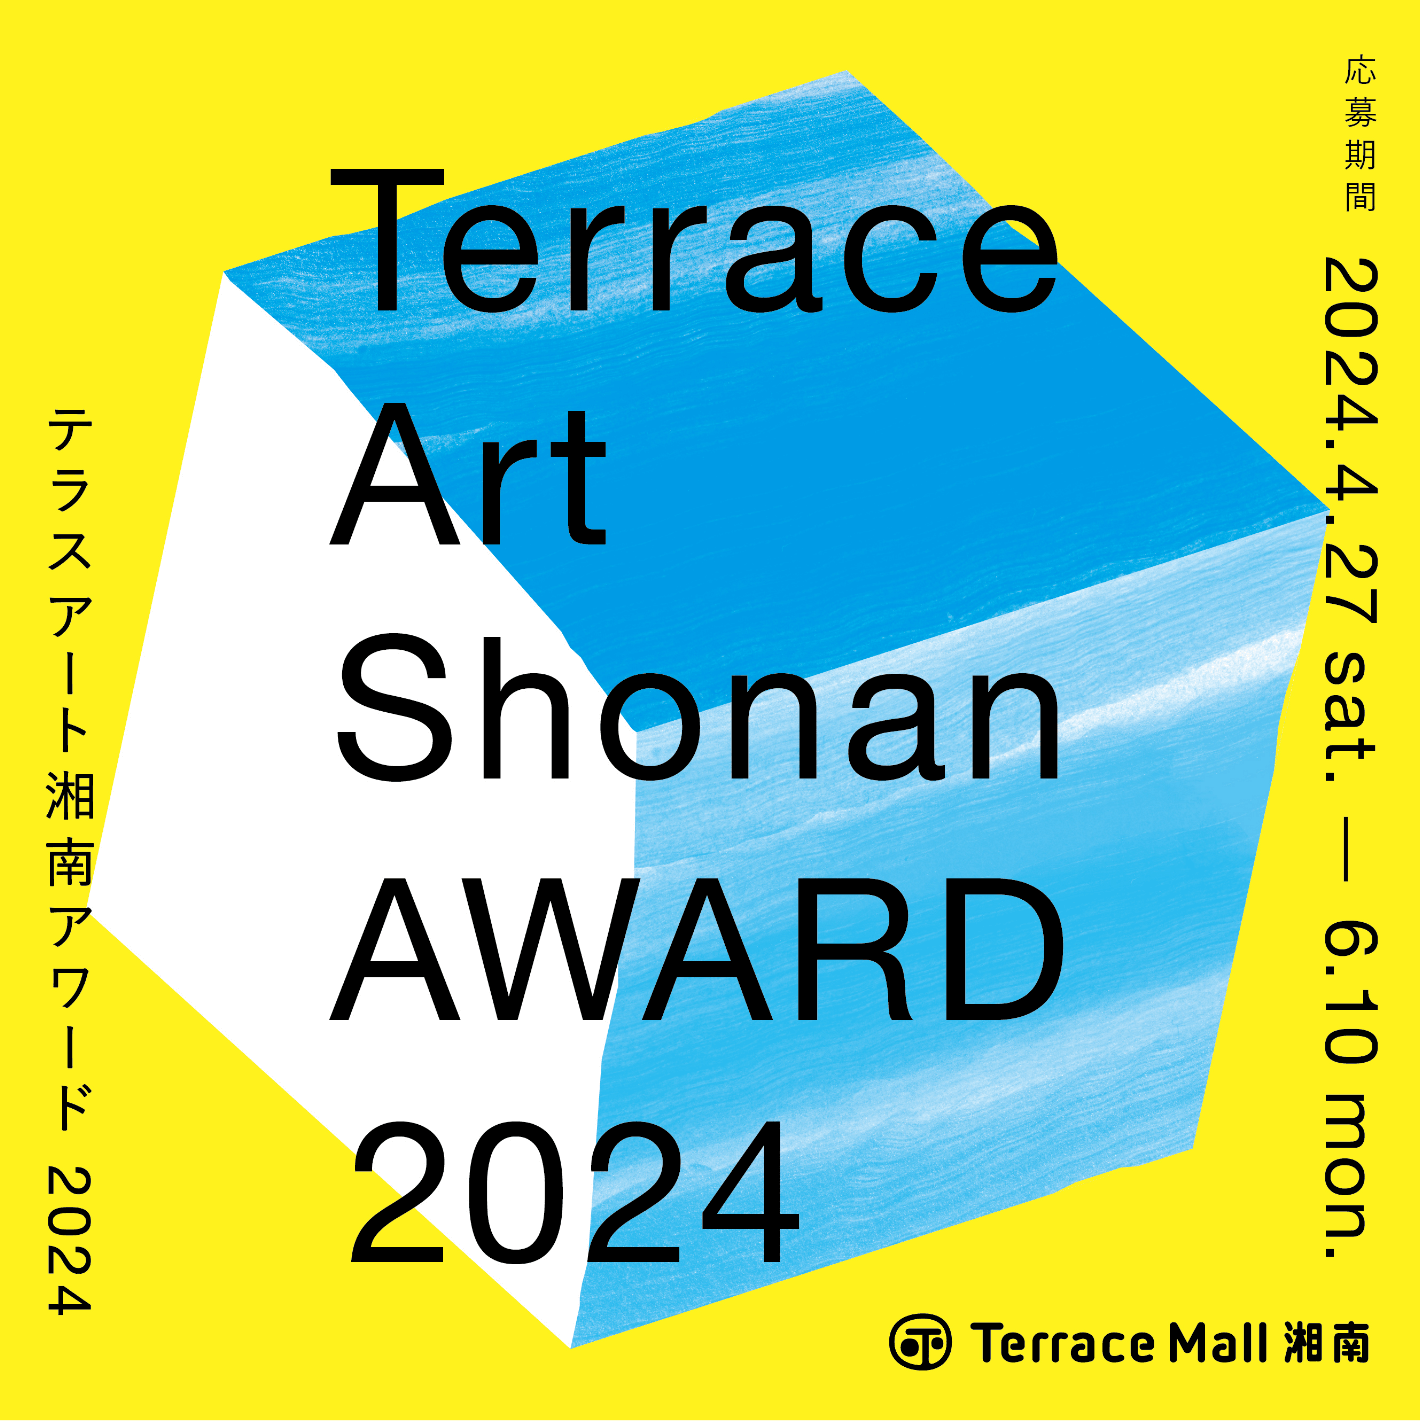 Terrace Art Shonan AWARD 2023